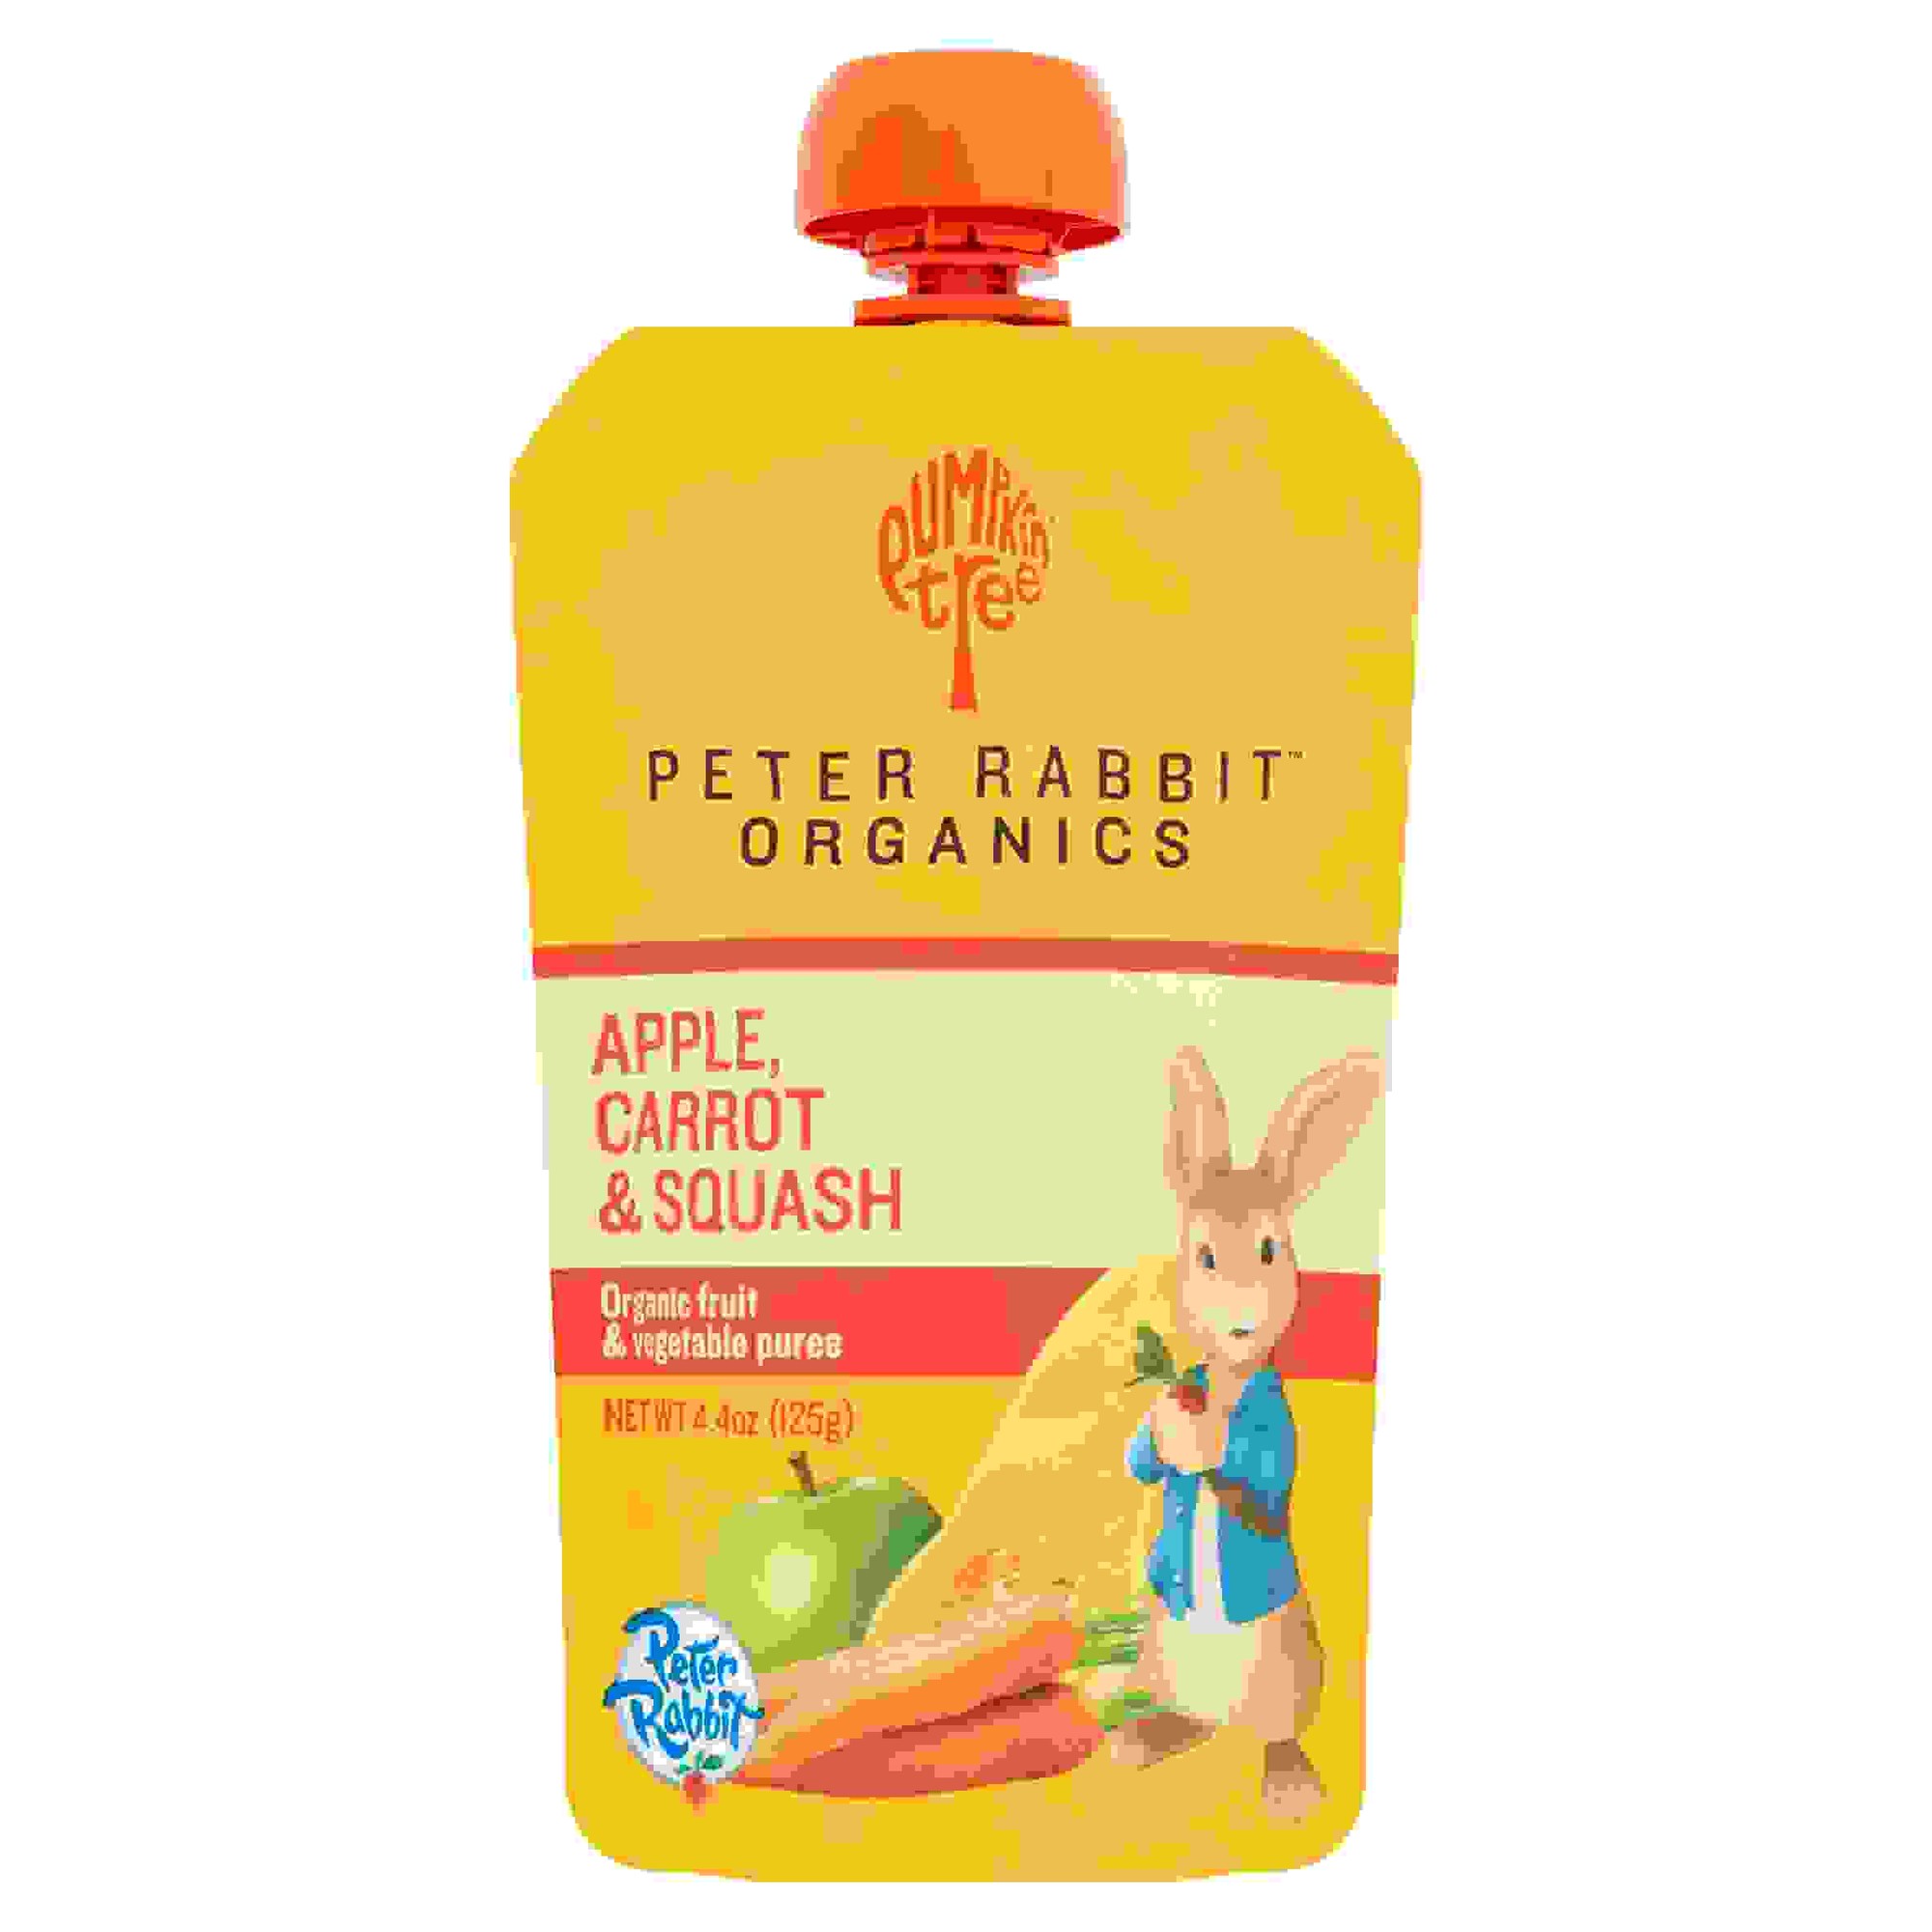 Peter Rabbit Organics Carrot, Squash & Apple Snack (10x4.4 Oz)